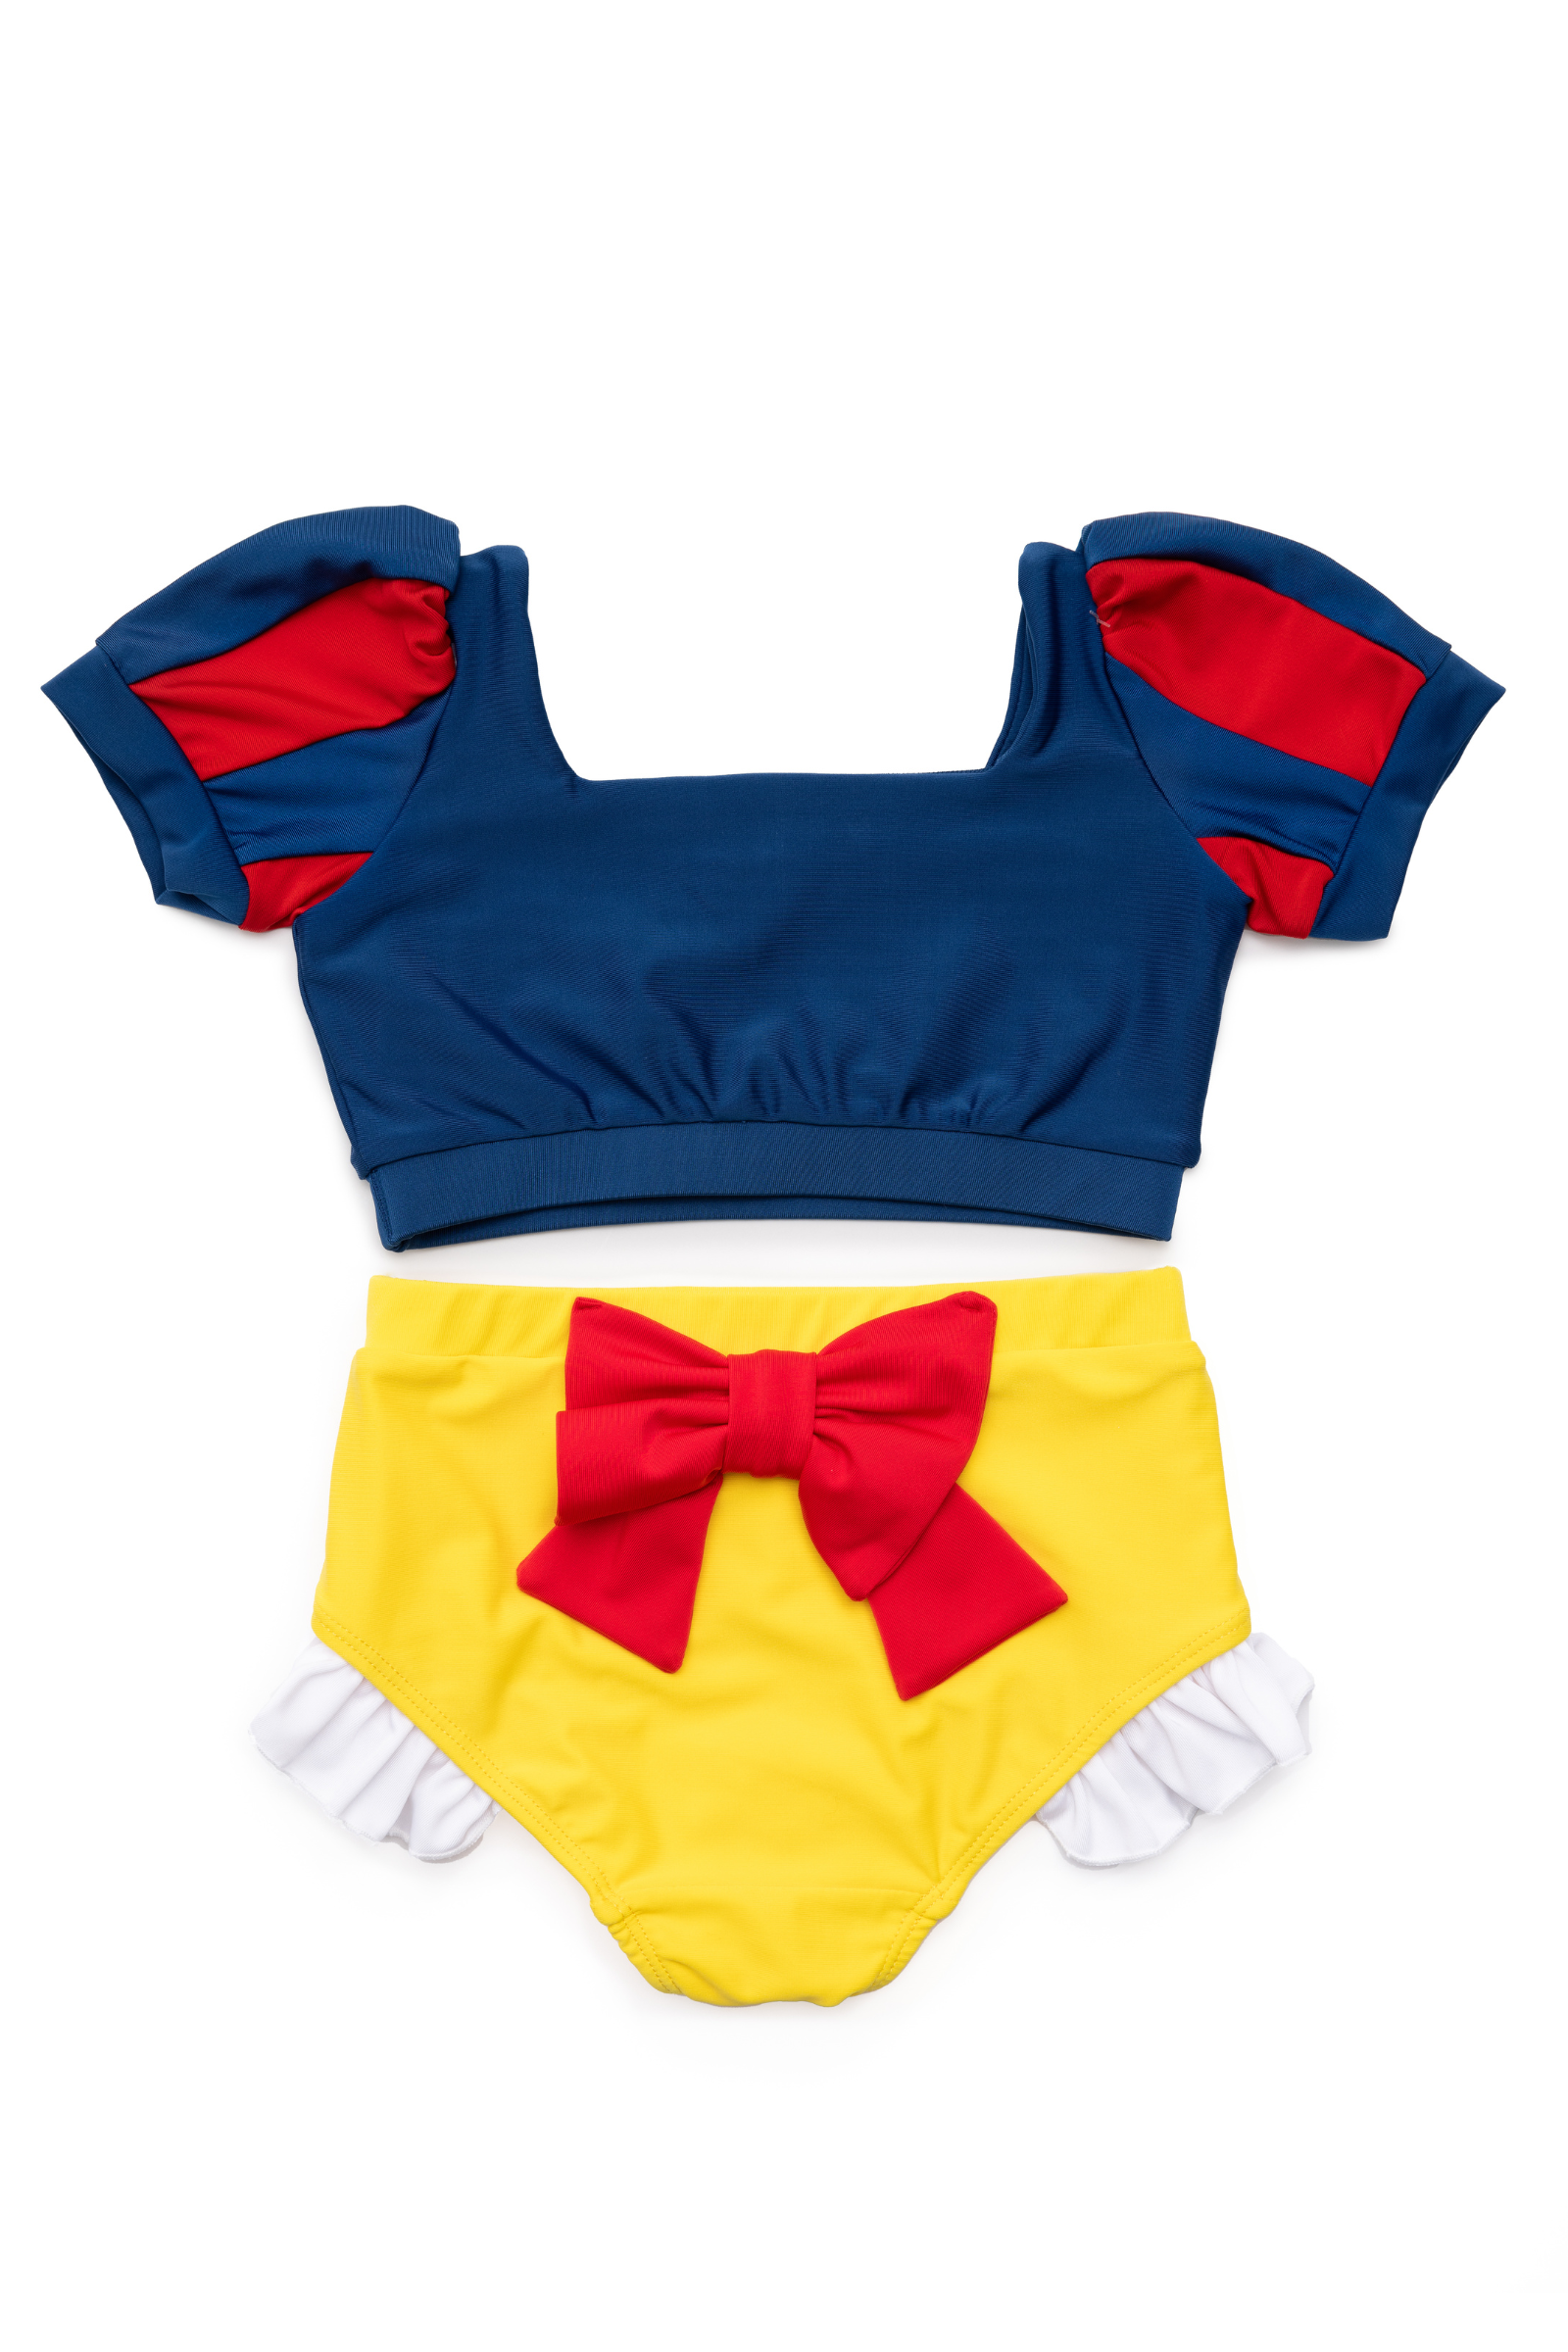 Snow White Swim Suit & Mirror Bundle